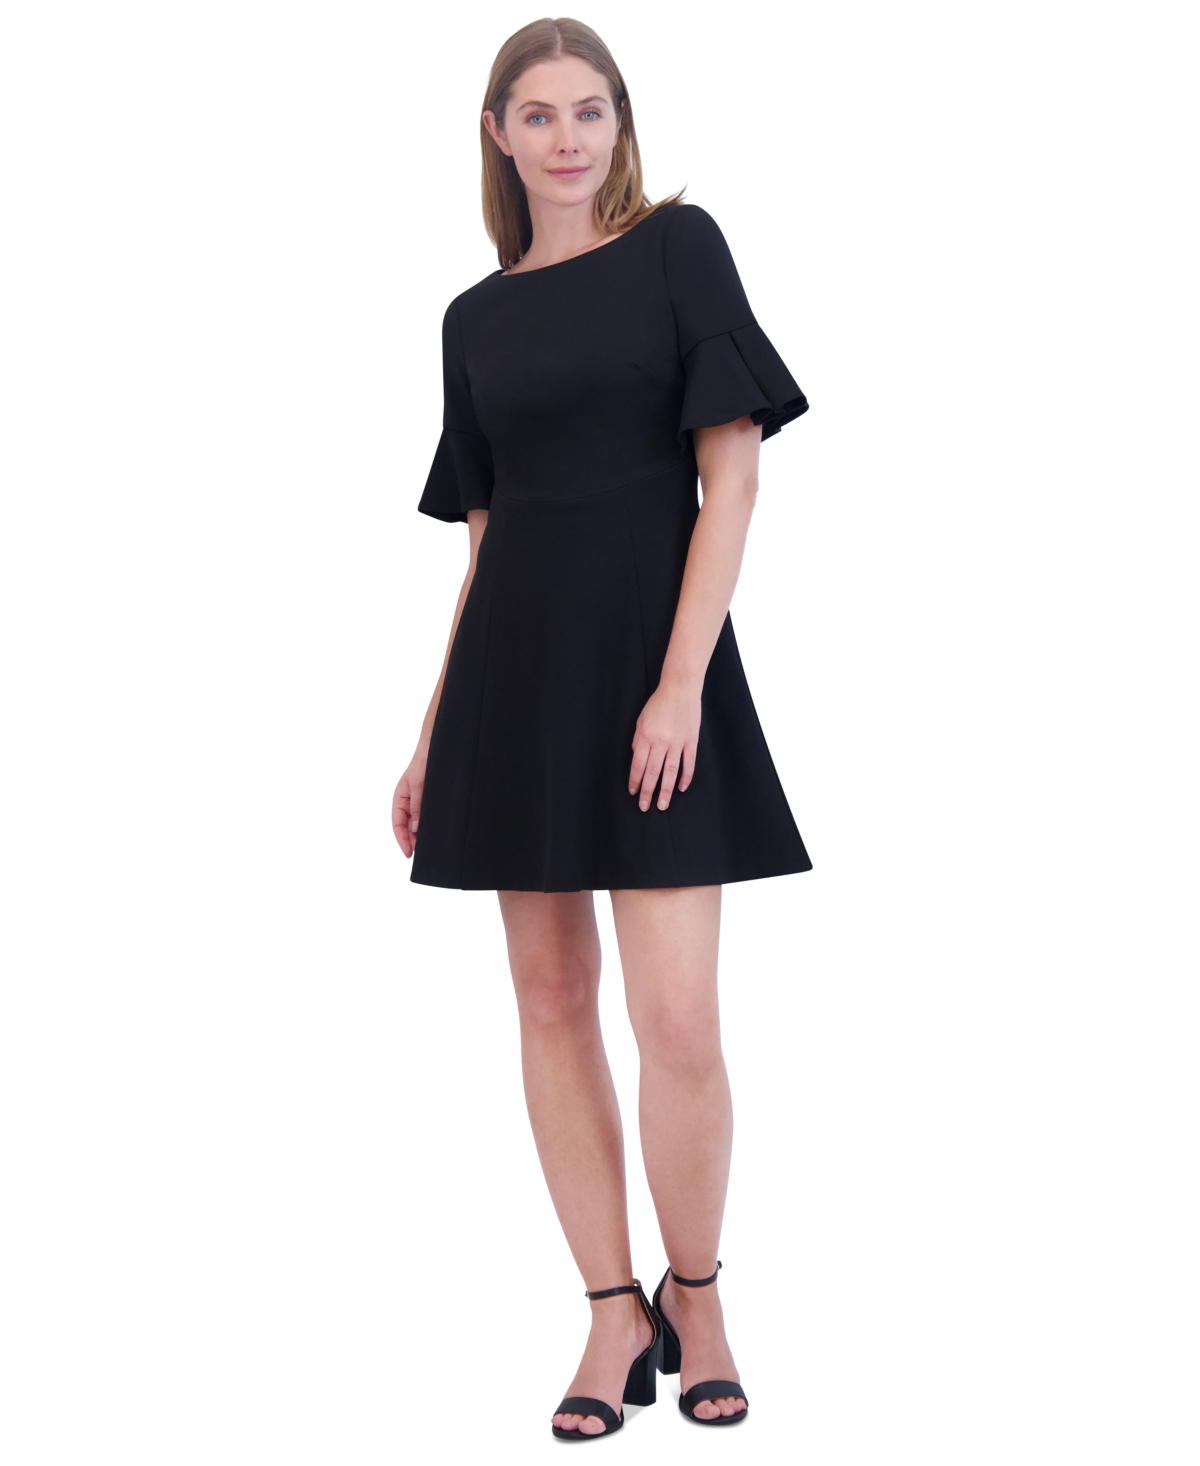 Petite Elbow-Sleeve Fit & Flare Dress - Black